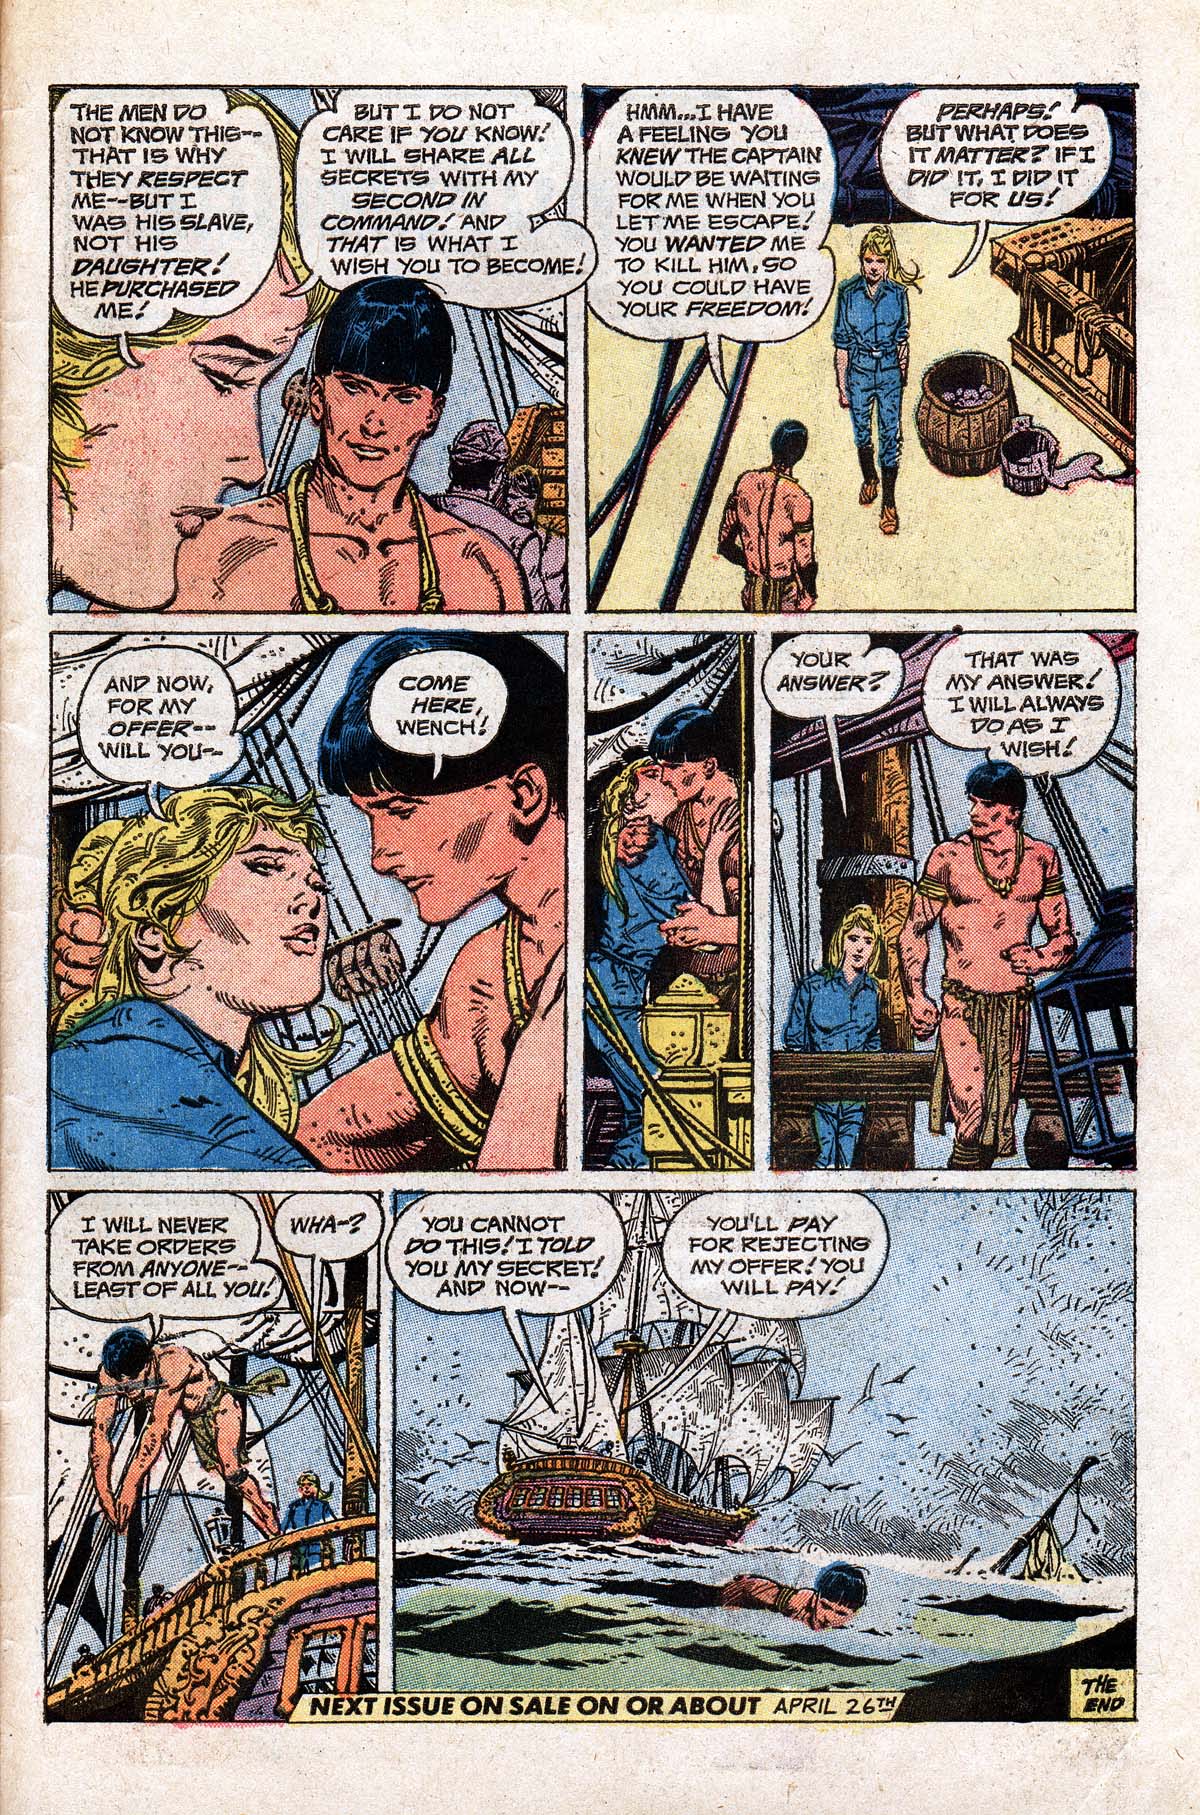 Adventure Comics #427 (1973) by Steve Skeates and Alex Nino